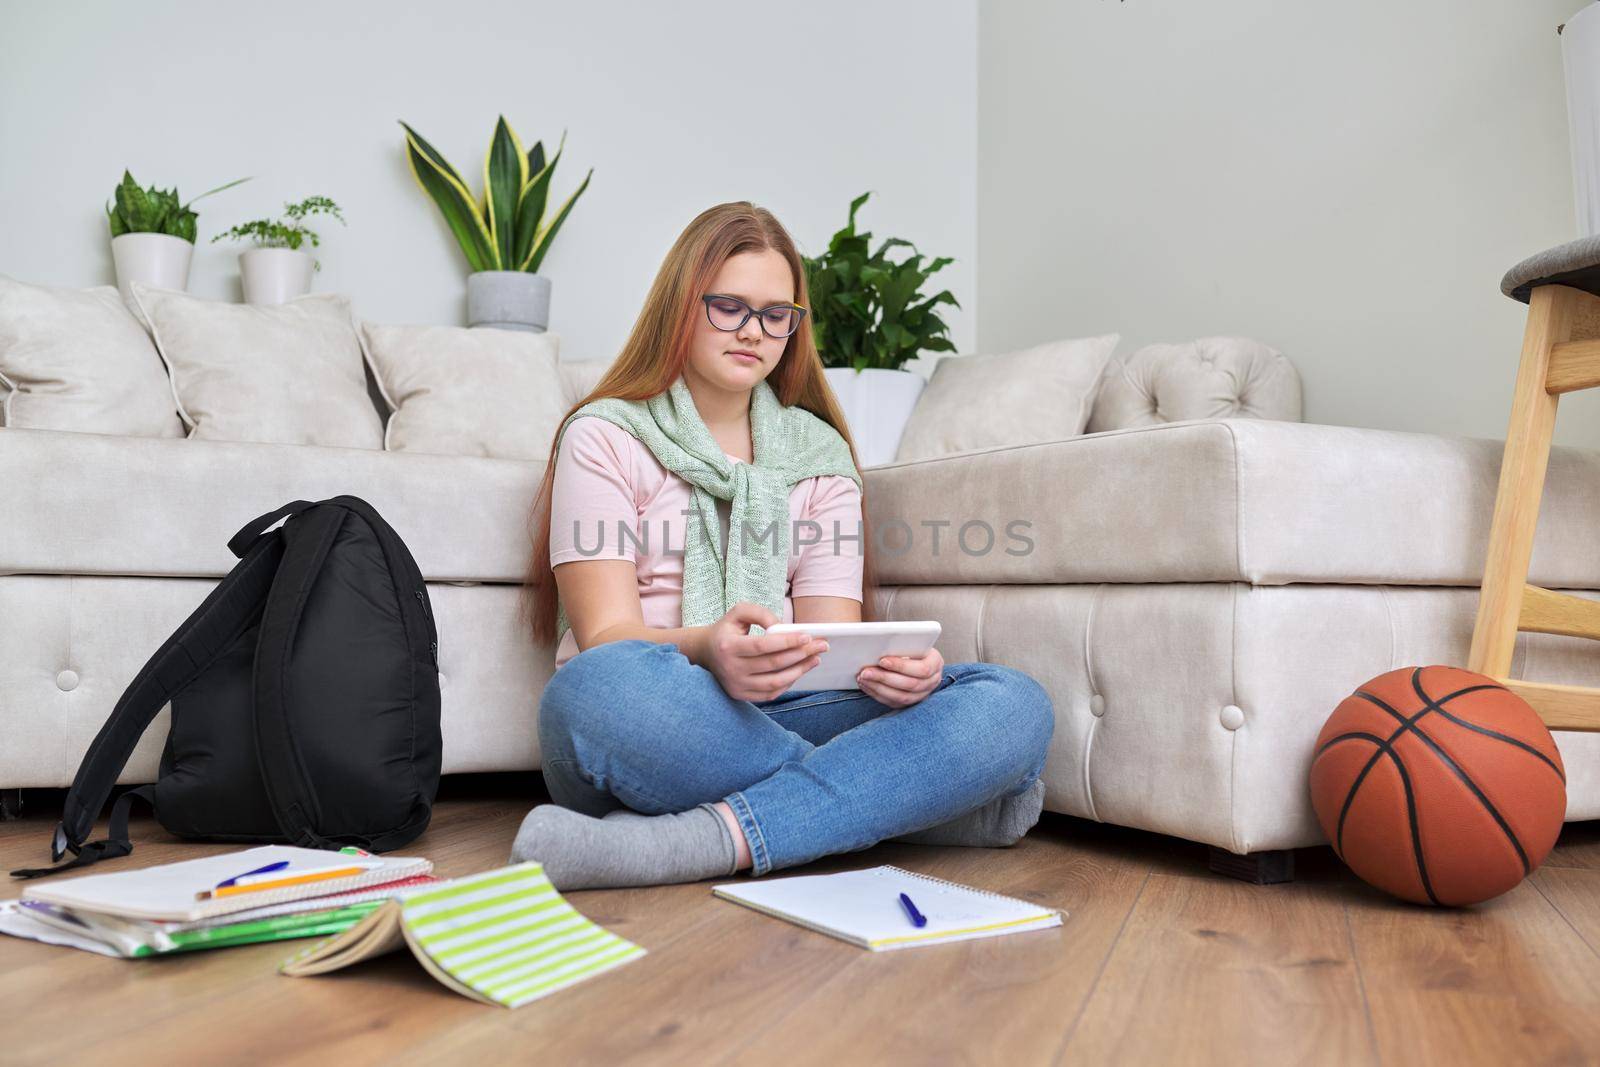 Portrait of teenage girl 12, 13 years old sitting at home on floor with school books, digital tablet. Online studies, e-education, resting schoolgirl using Internet modern digital technologies gadgets